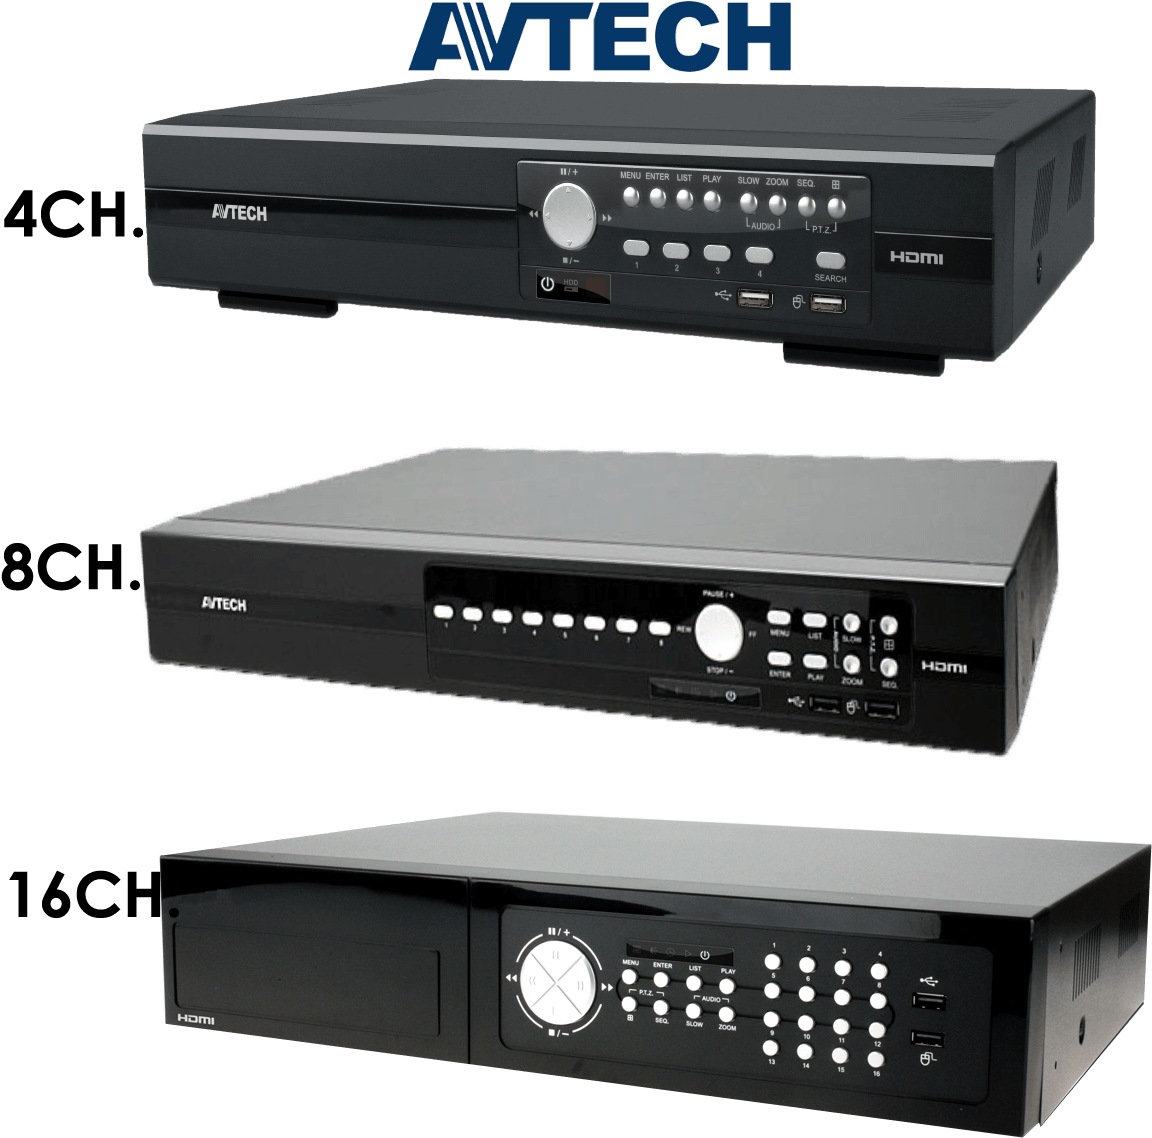 Av tech. Видеорегистратор AVTECH H.264 4ch DVR. ITECH видеорегистратор h264. Видорегистратор AVTECH mpeg4 DVR. 16ch DVR SHR-2162.